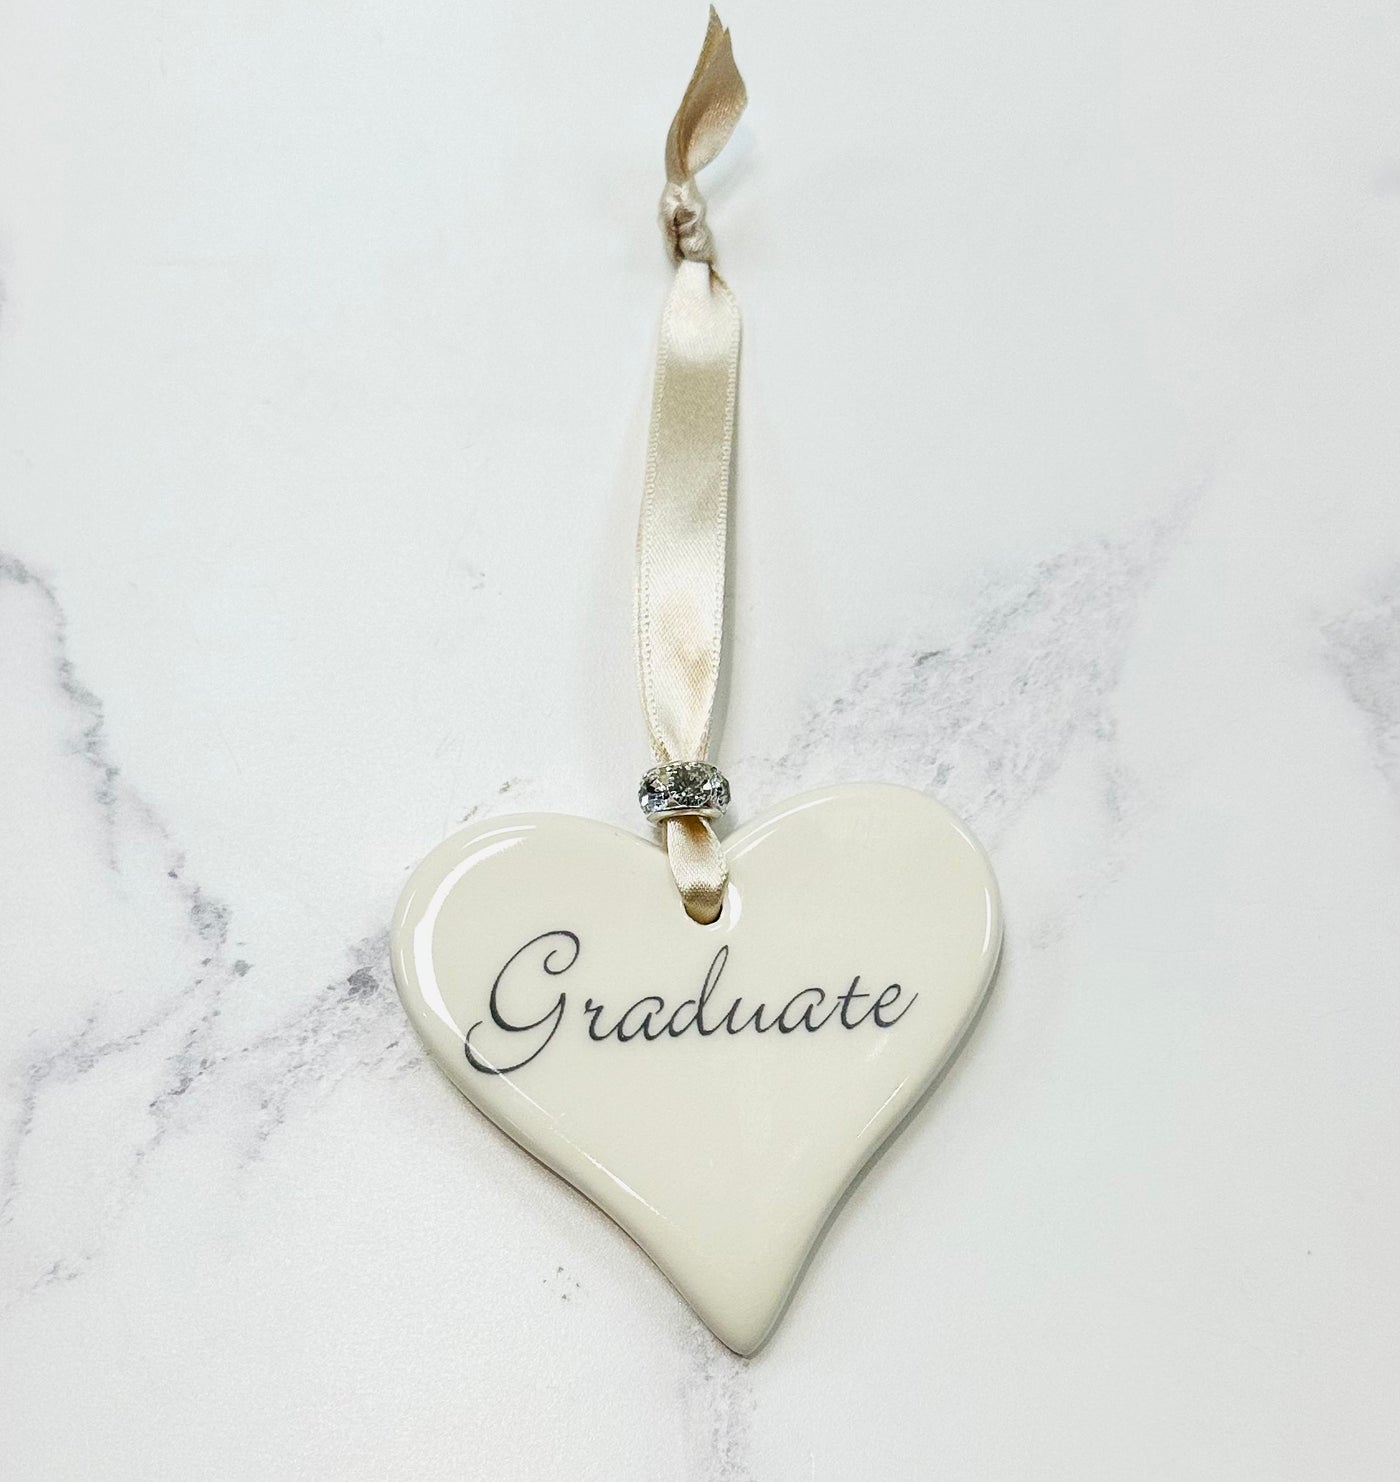 Dimbleby Ceramics Sentiment Hanging Heart - Graduate